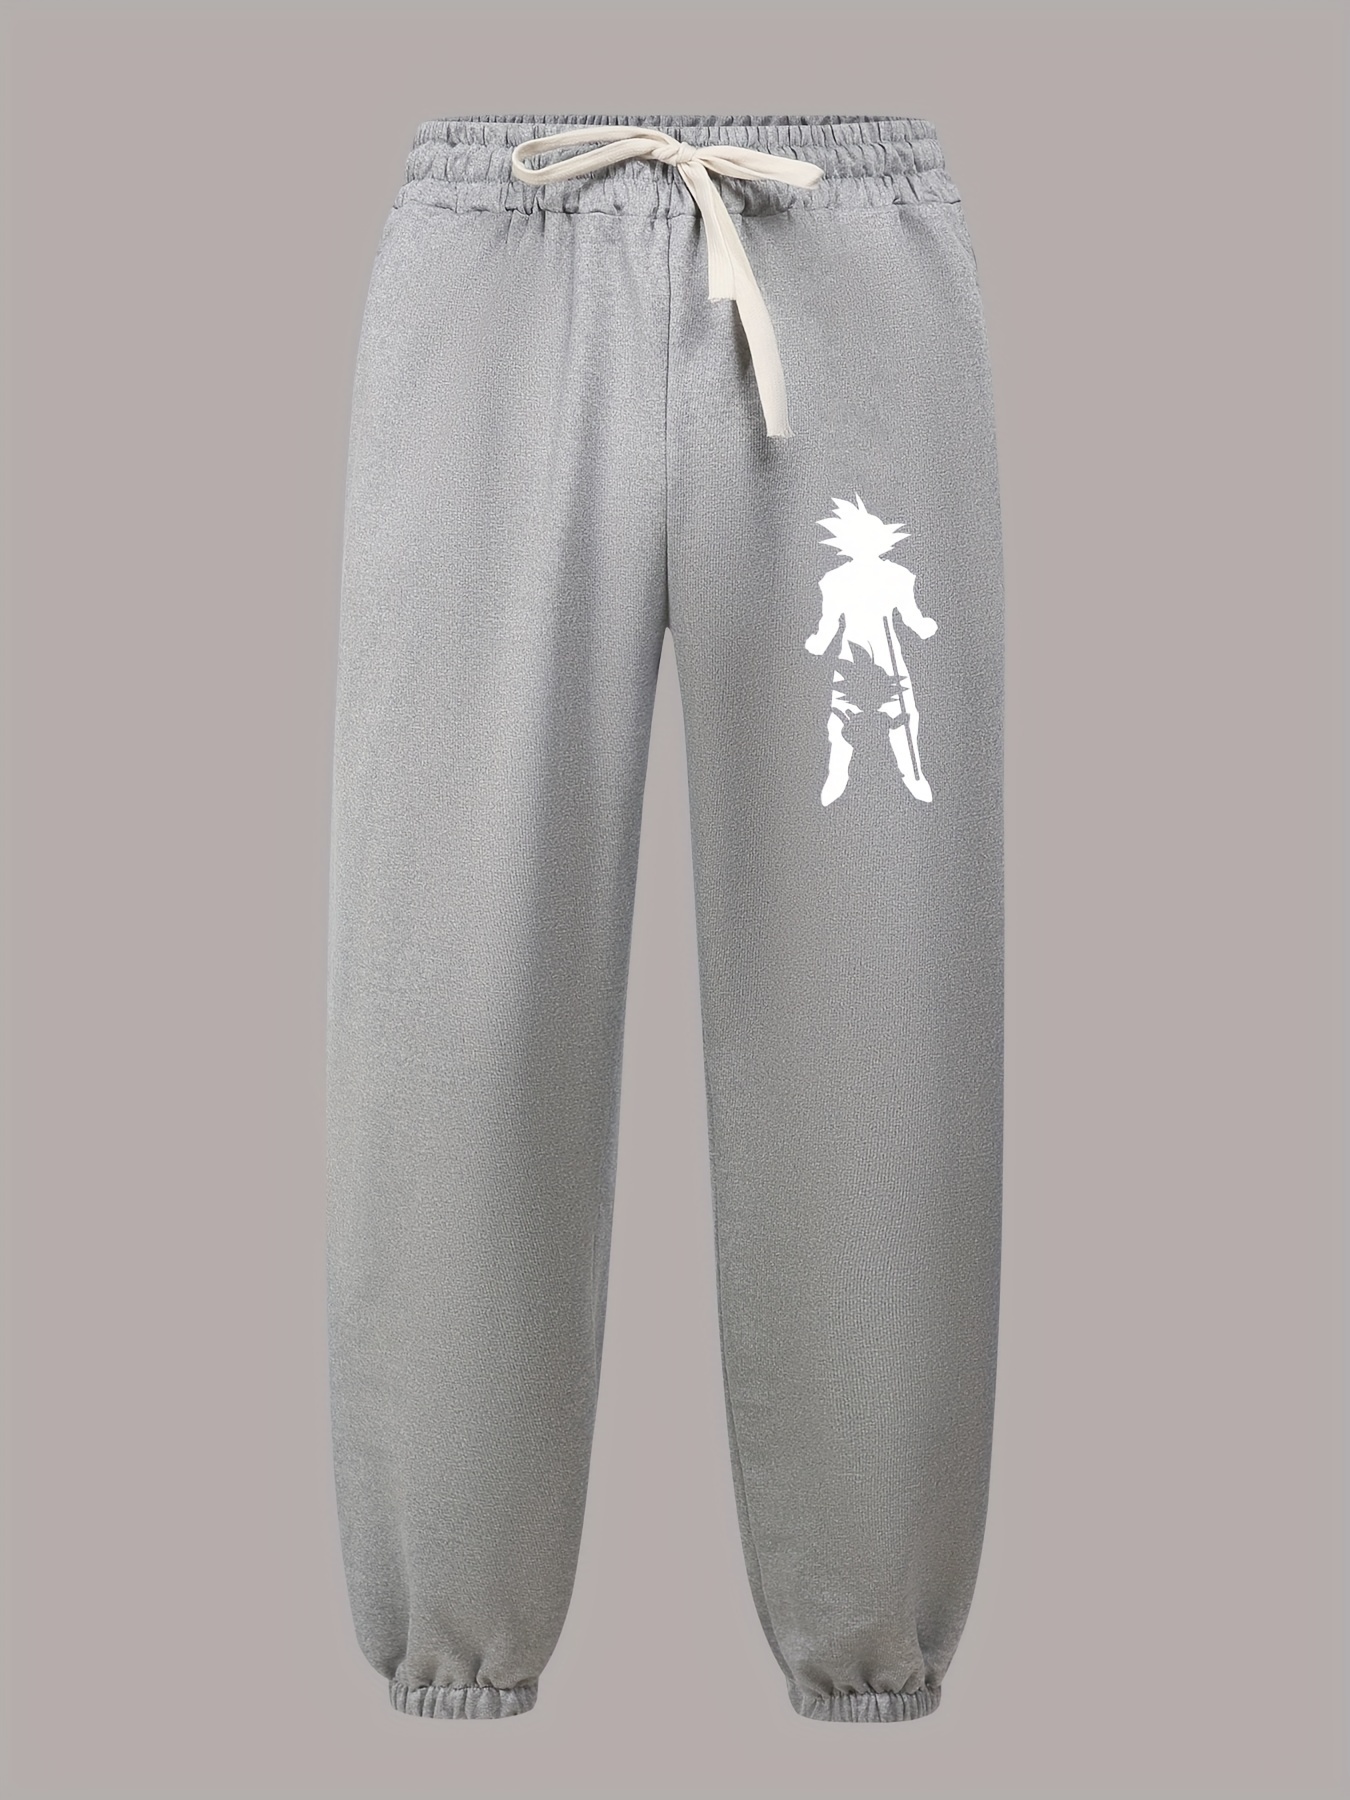 Anime Pattern Print Drawstring Sweatpants Loose Fit Pants Men's Casual  Joggers For Men Winter Fall Running Jogging